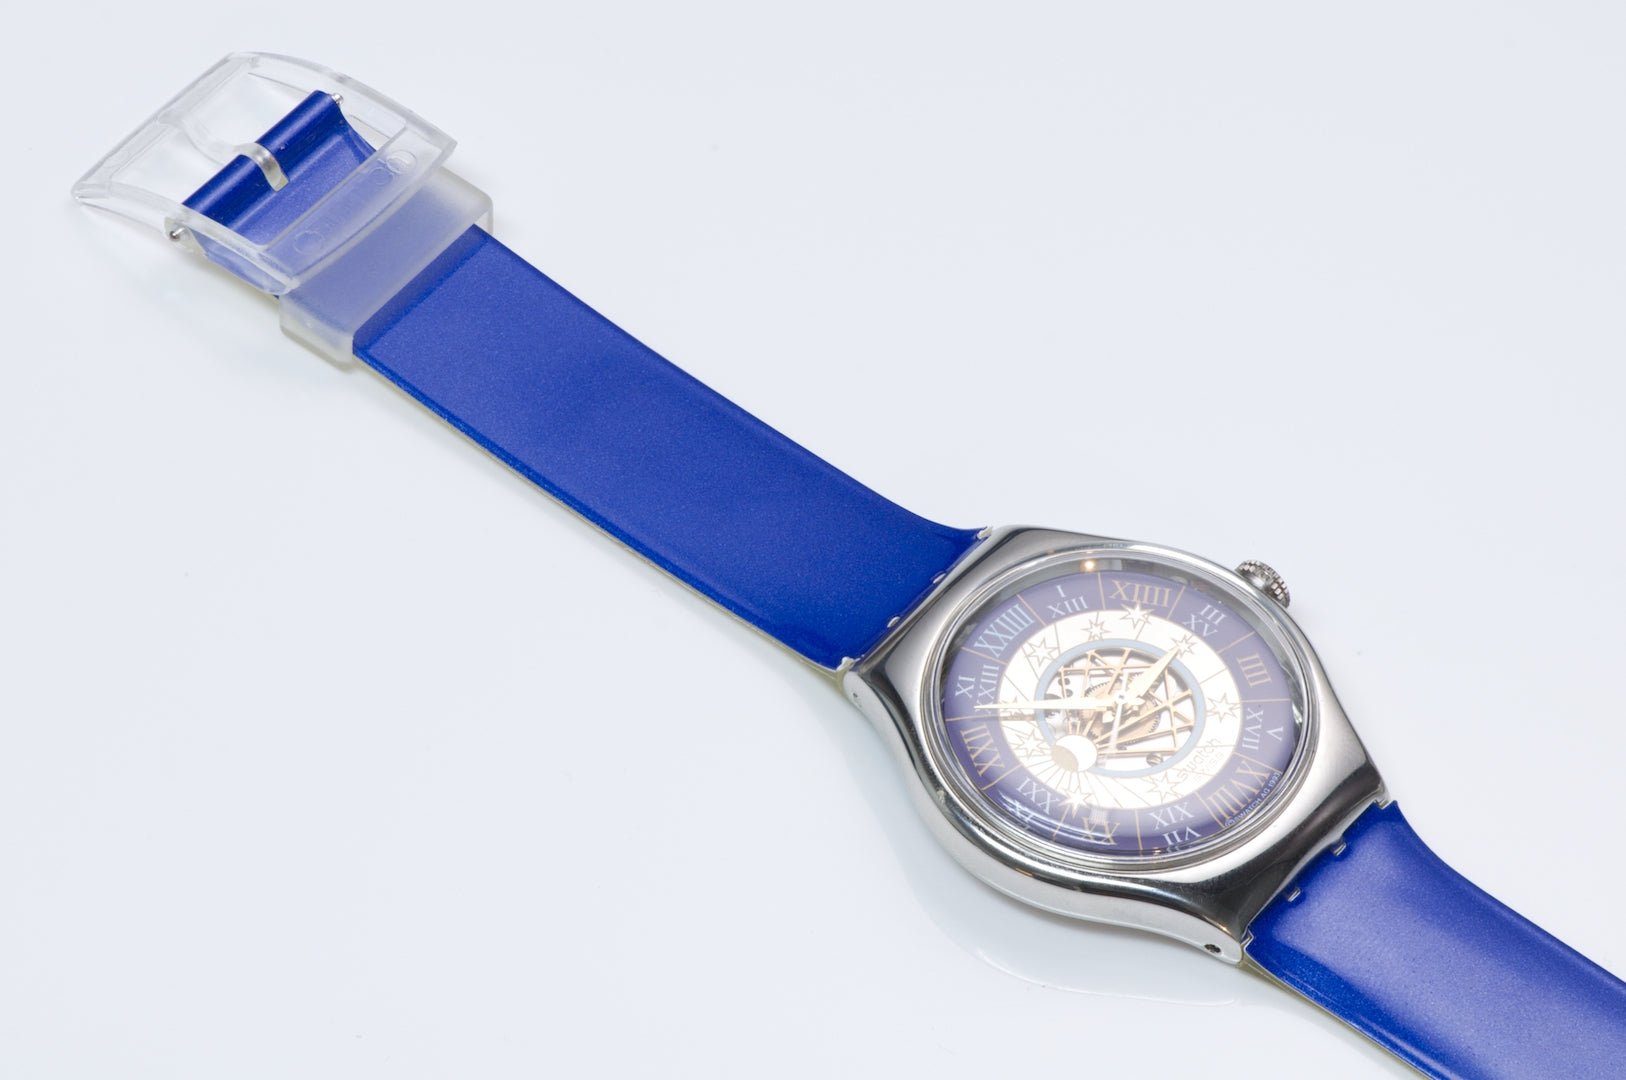 Swatch Tresor Magique Platinum Watch